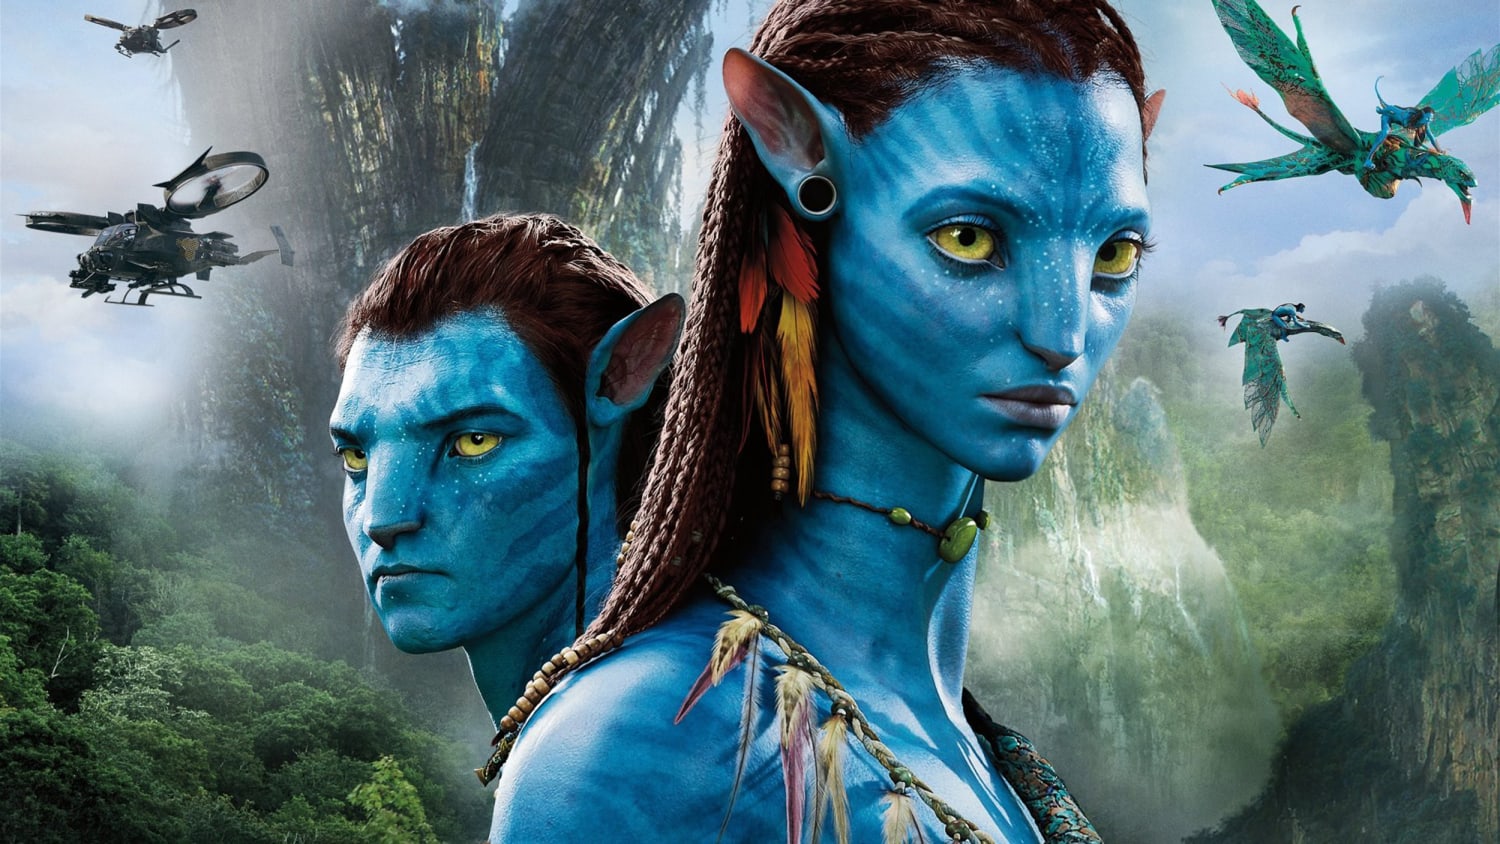 Kate Winslet to Sam Worthington Meet the Avatar 2 cast